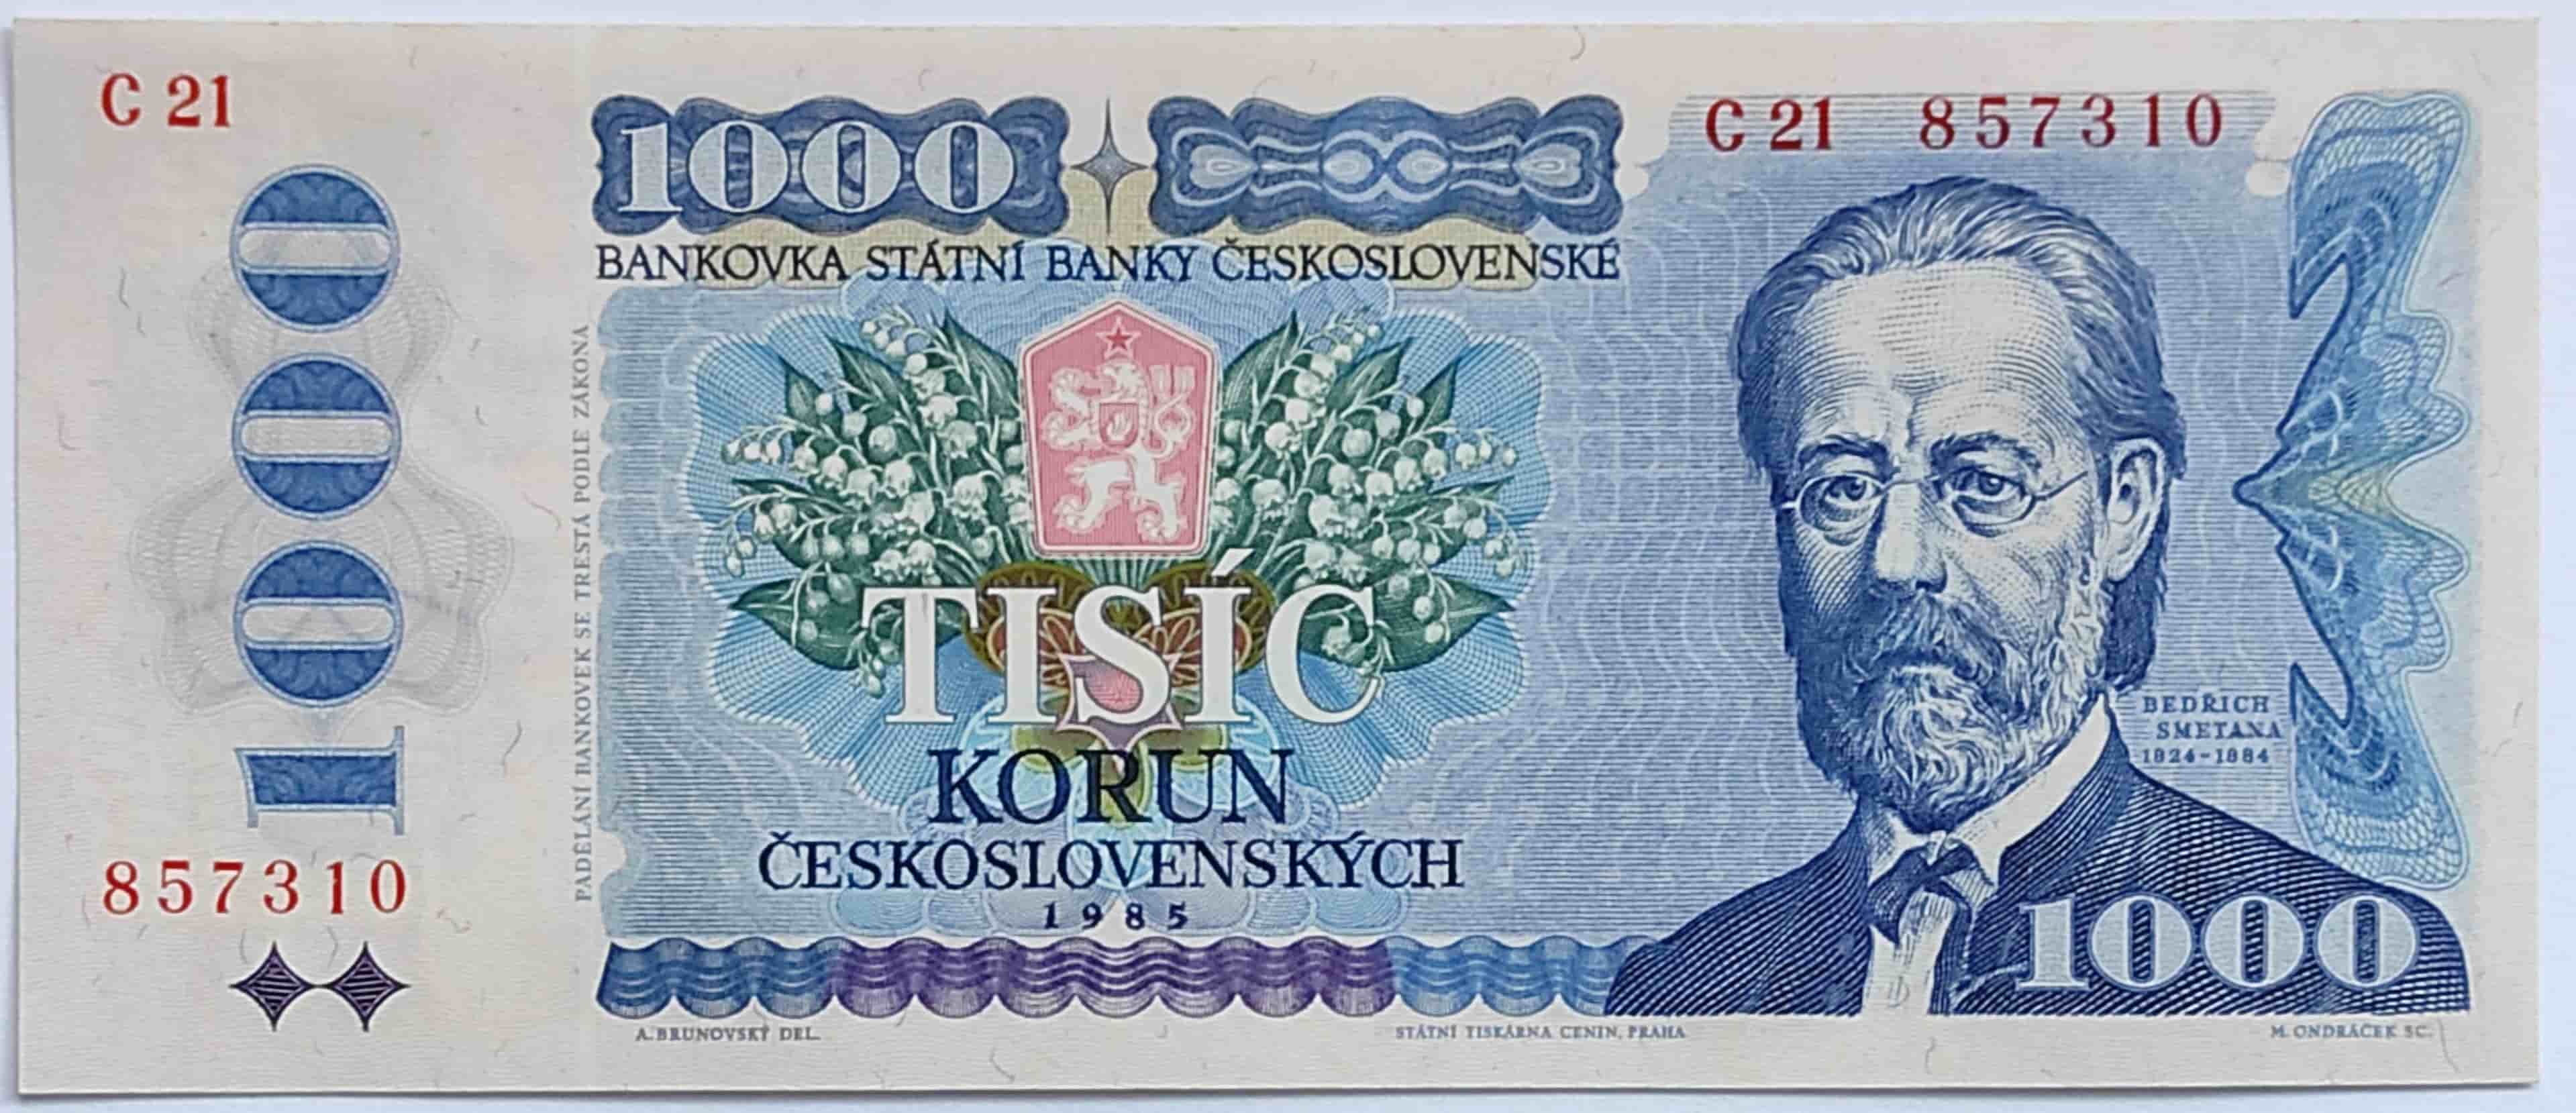 1000 Kčs 1985 C21